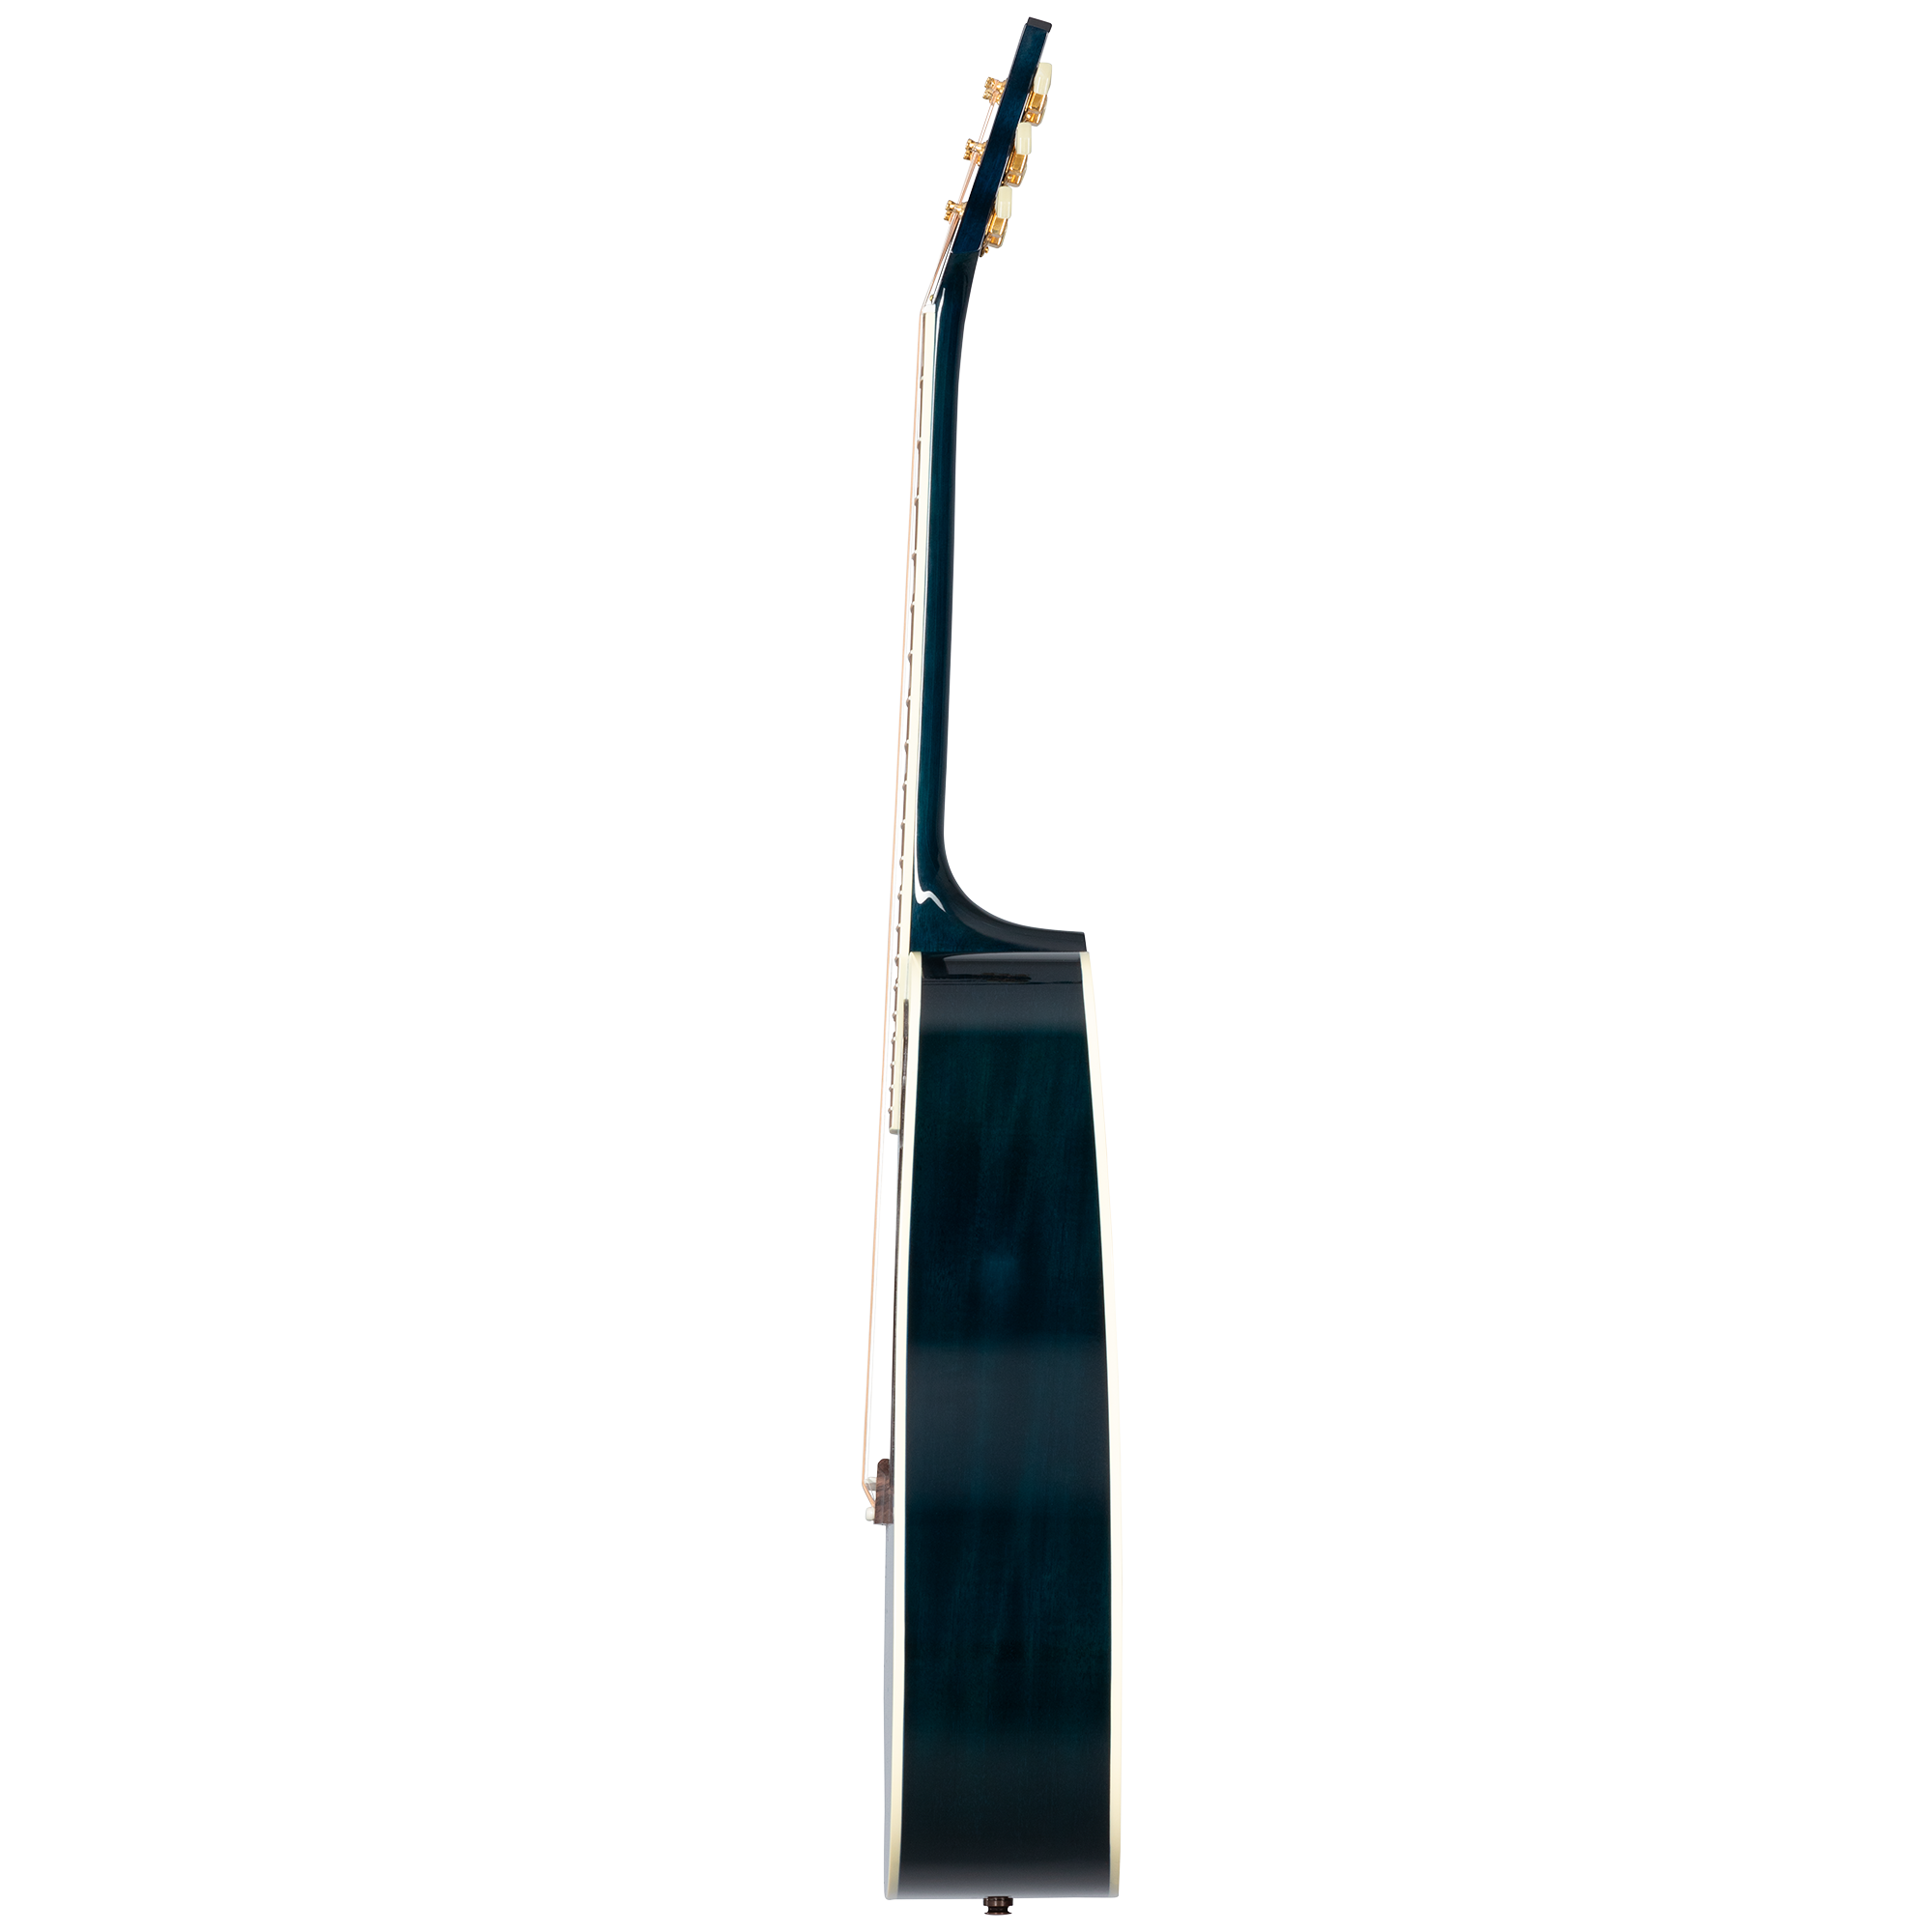 Gibson Acoustic Miranda Lambert Bluebird Acoustic-electric Guitar - Blue Bonnet